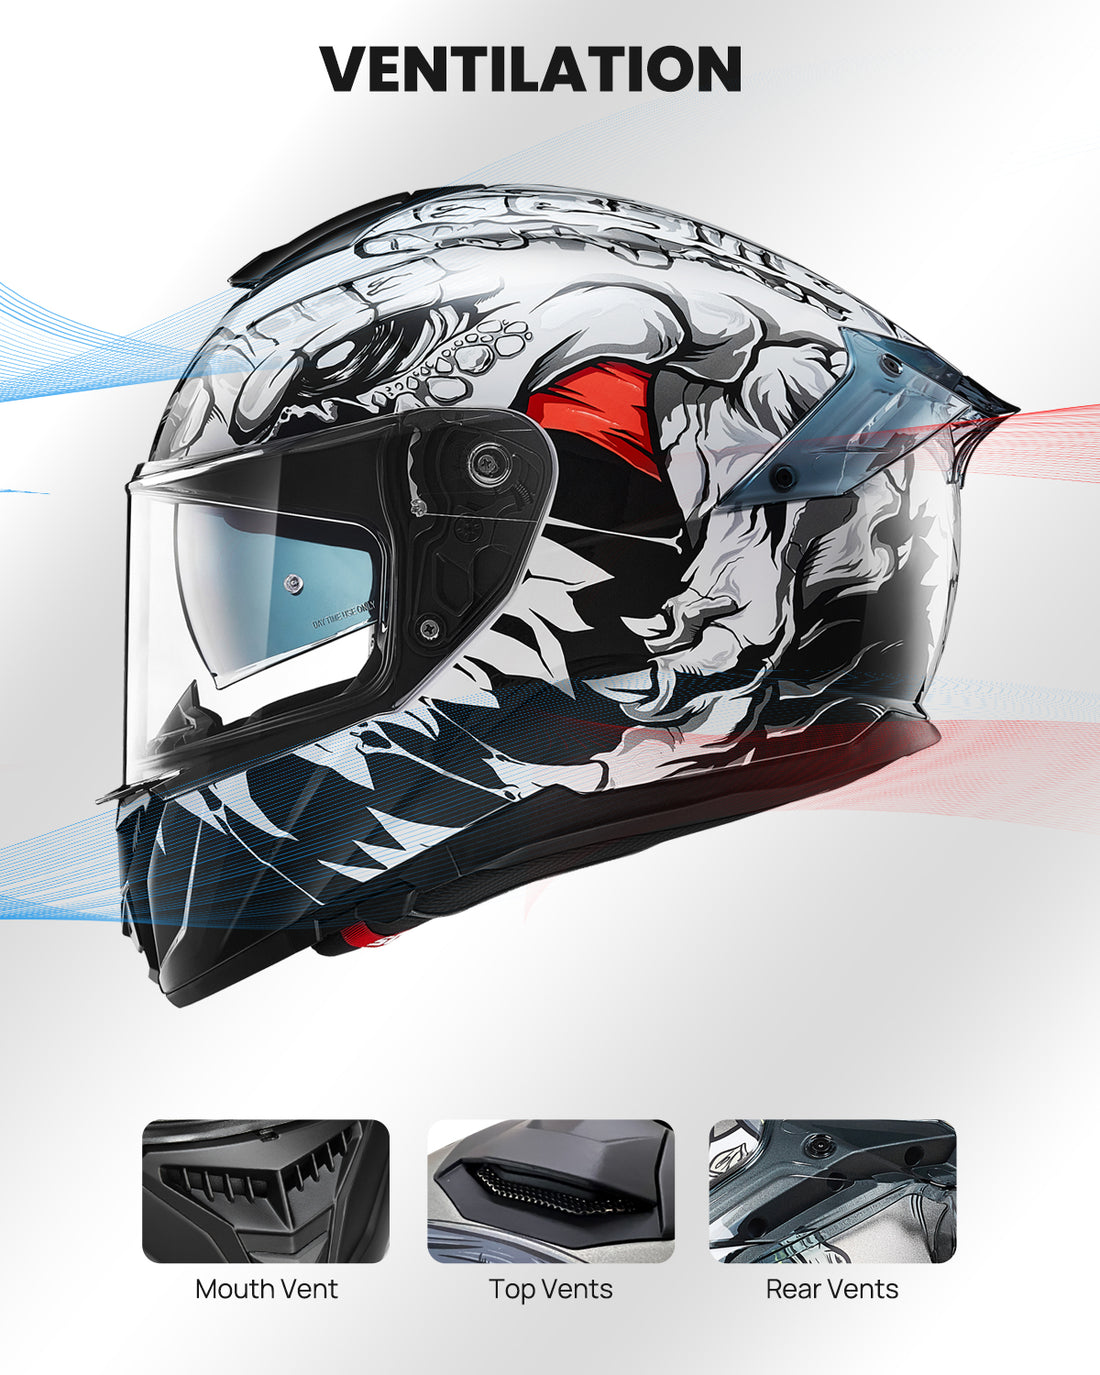 ILM Full Face Motorcycle Helmet Model 861A